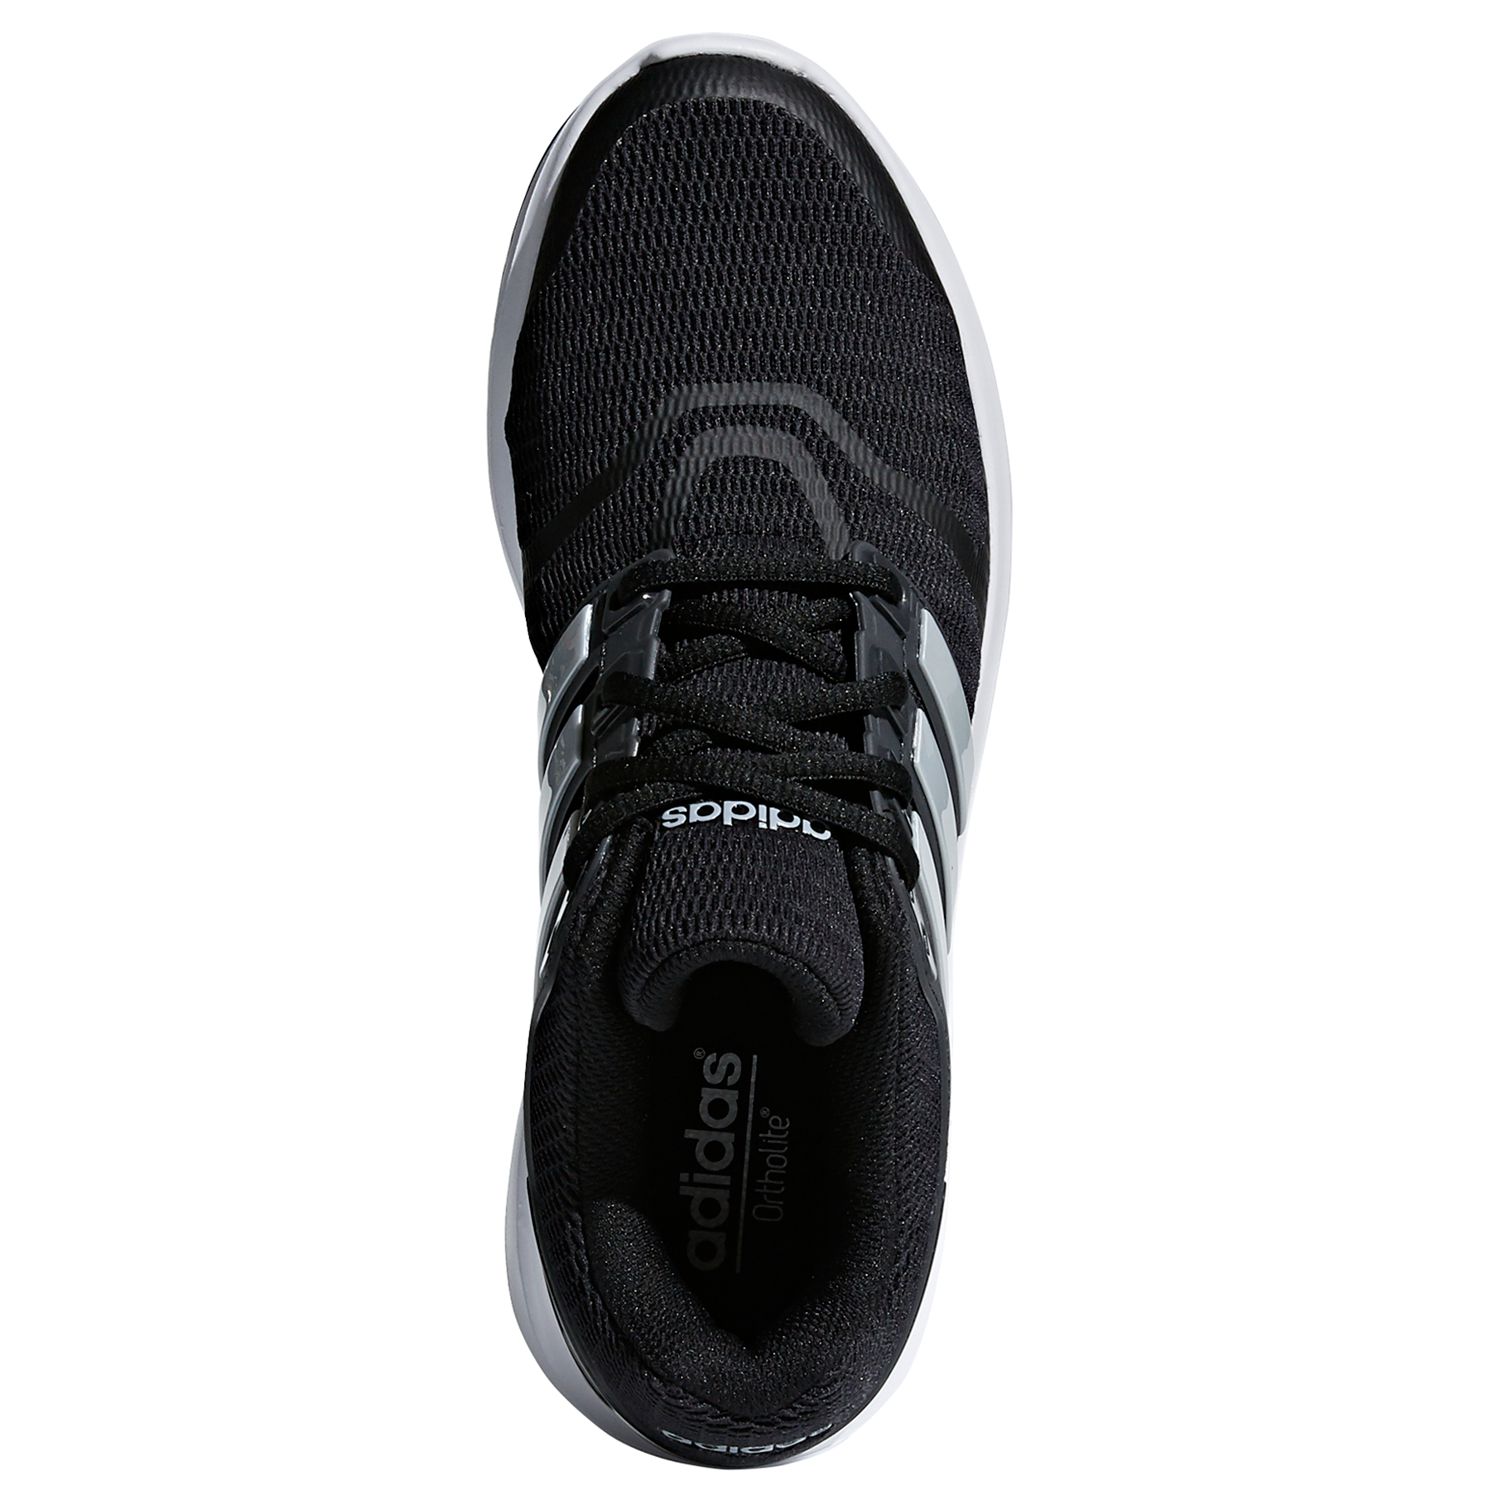 adidas women's cloud energy v running shoes